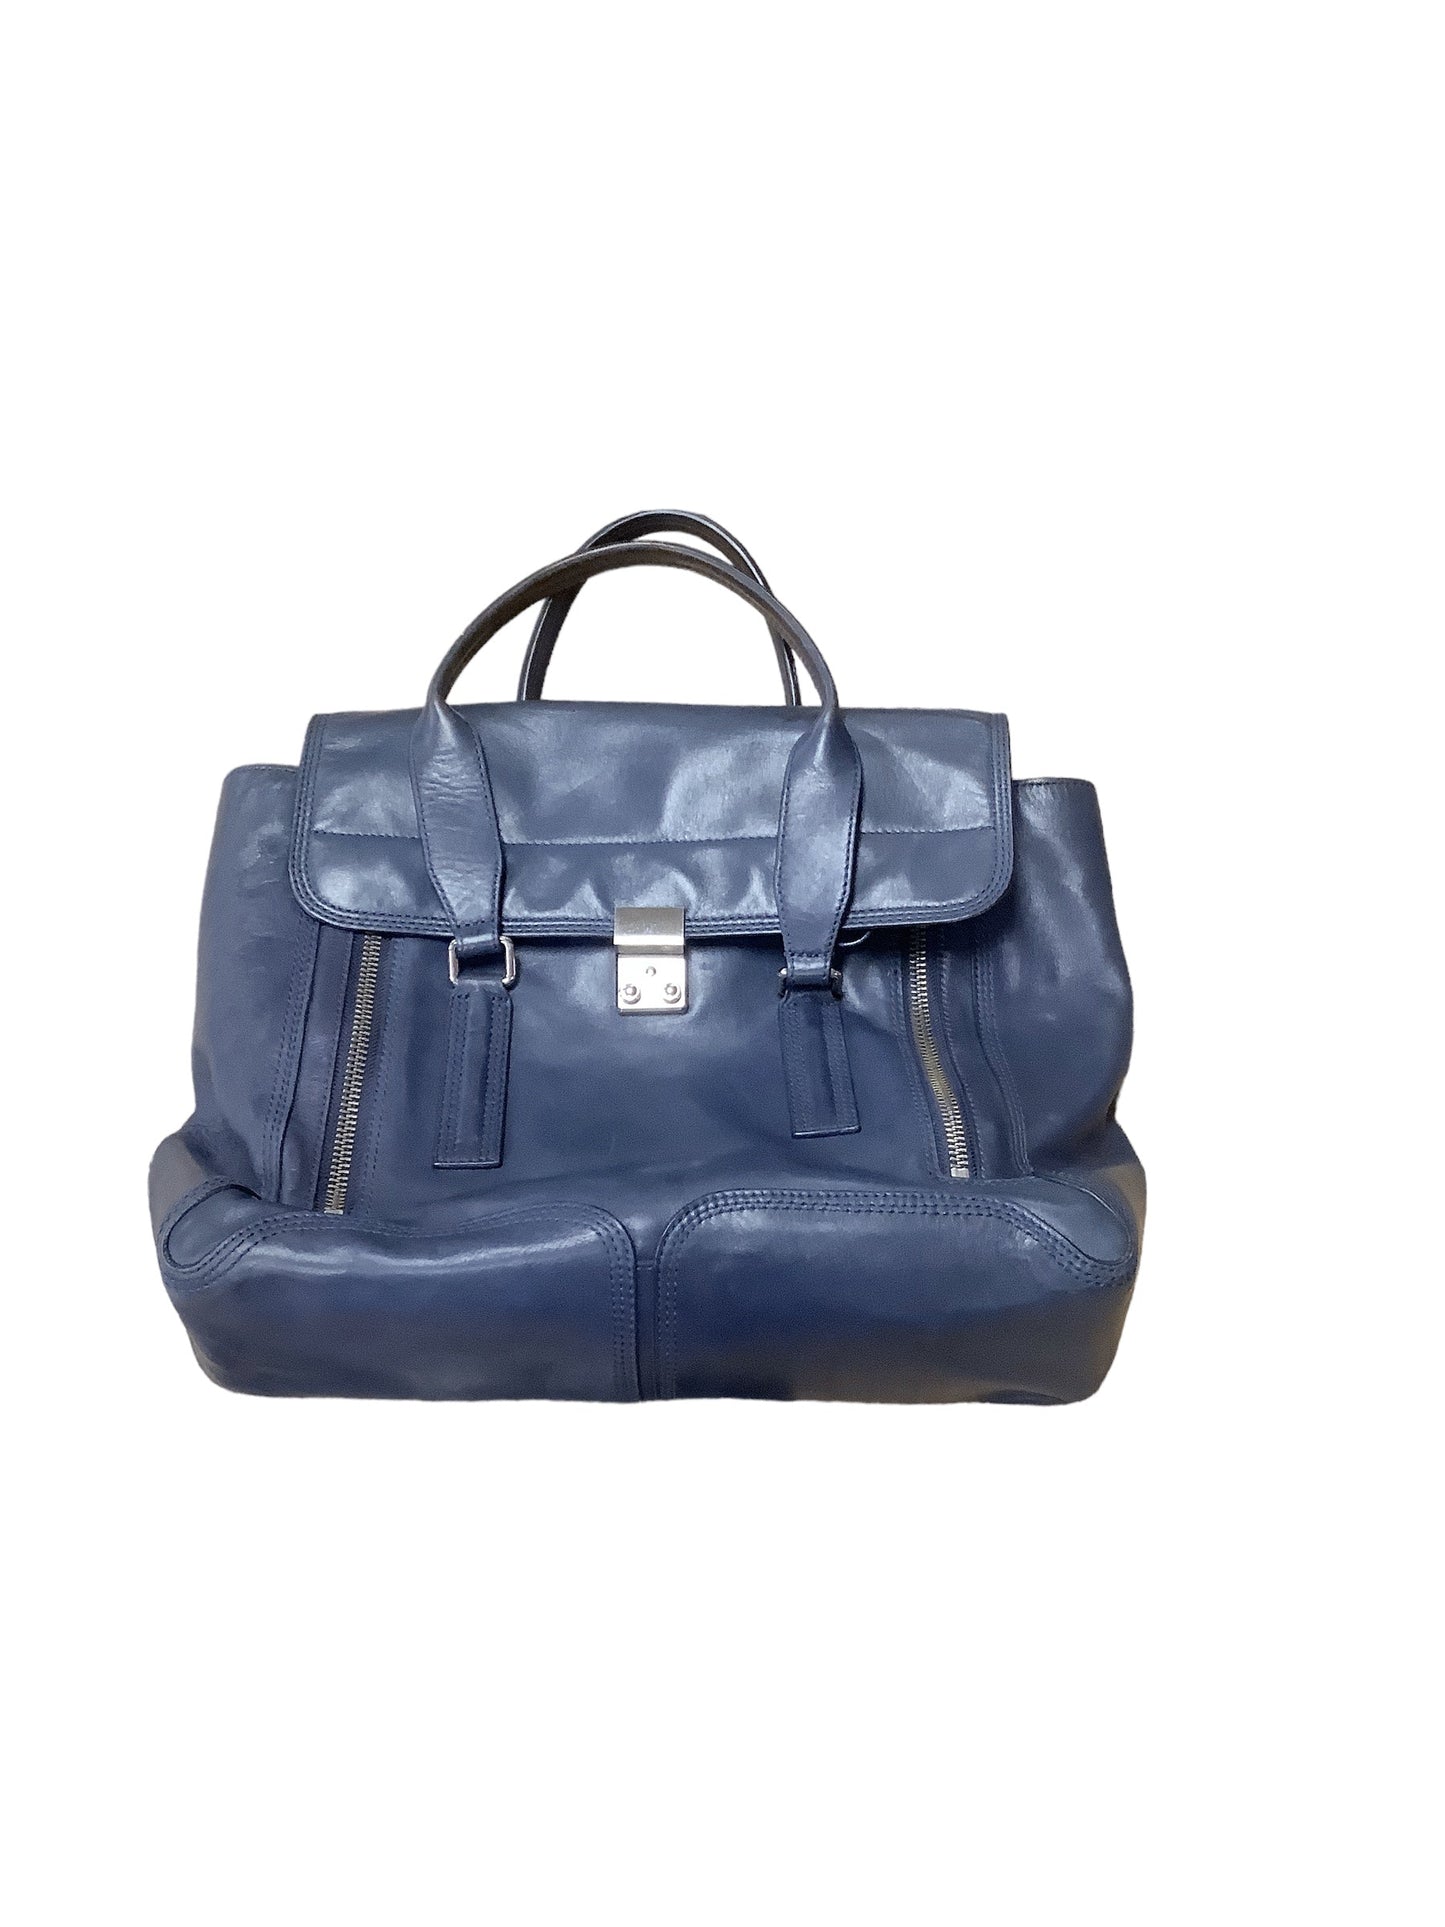 Handbag Designer By Cma  Size: Large